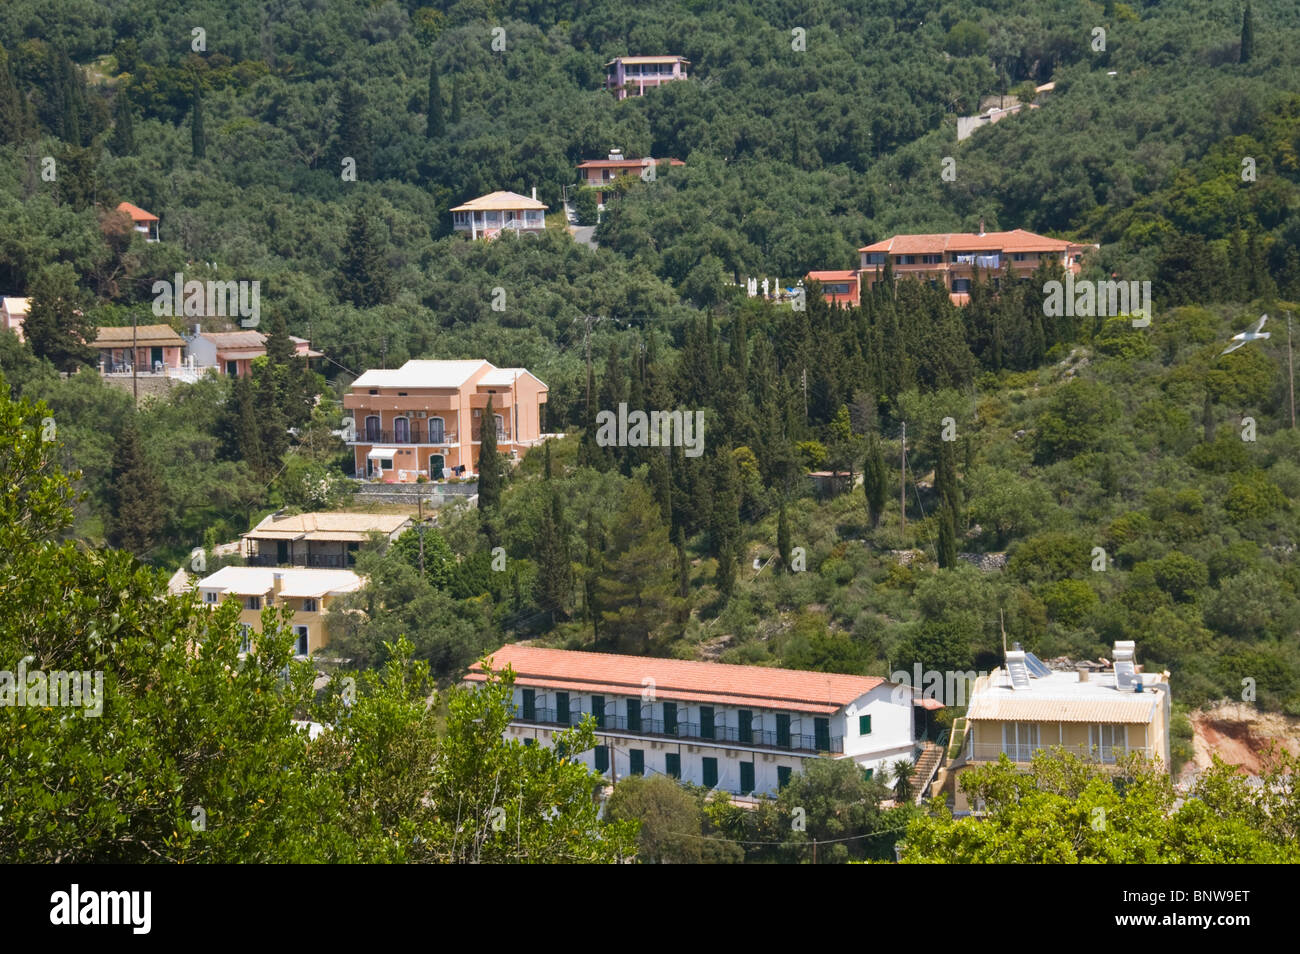 Holiday apartments on the wooded hillside overlooking Paleokastritsa on the Greek island of Corfu Greece GR Stock Photo